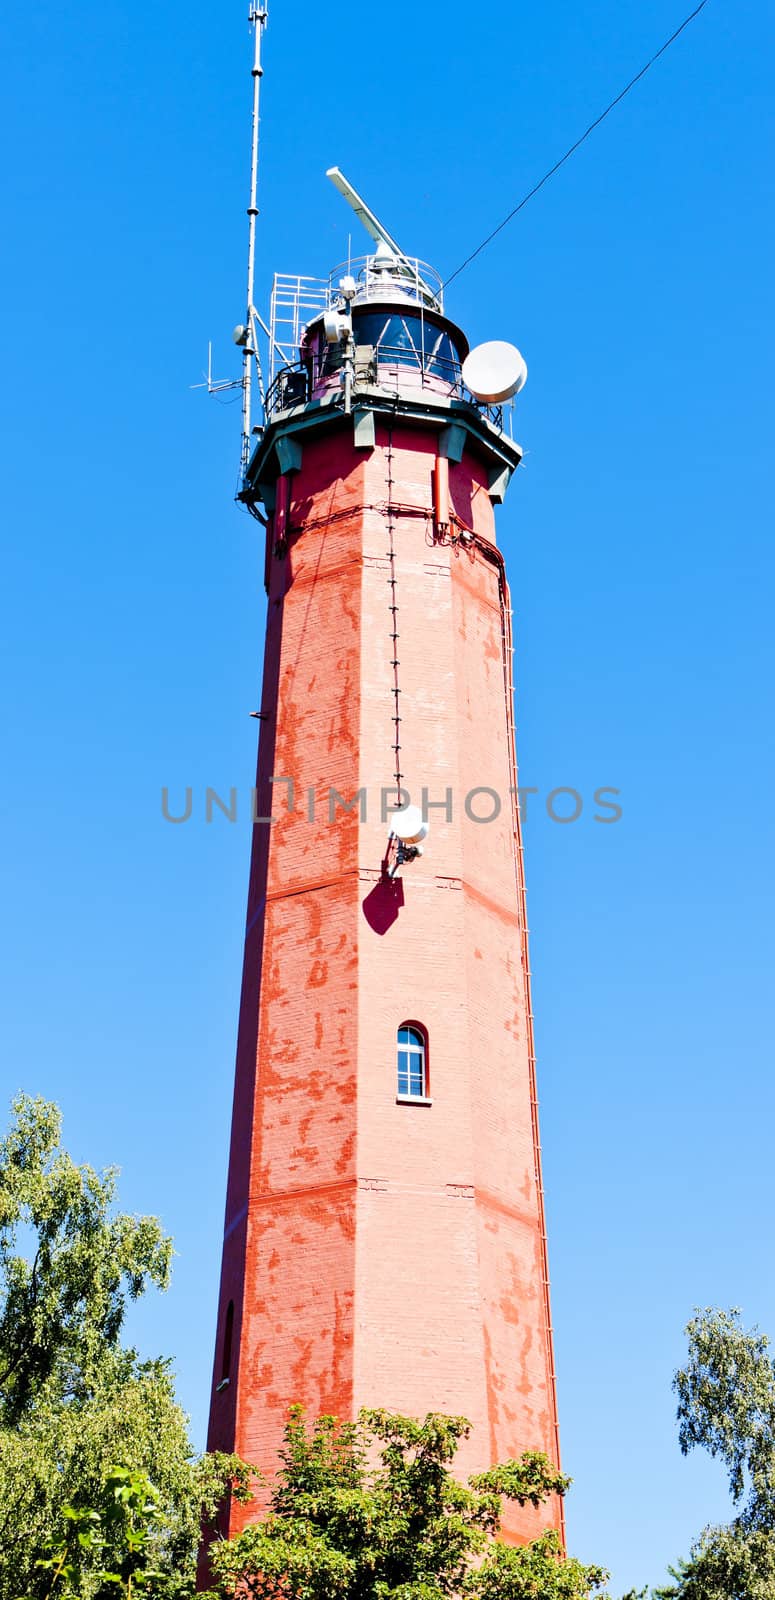 lighthouse Latia Morska in Hel, Pomerania, Poland by phbcz